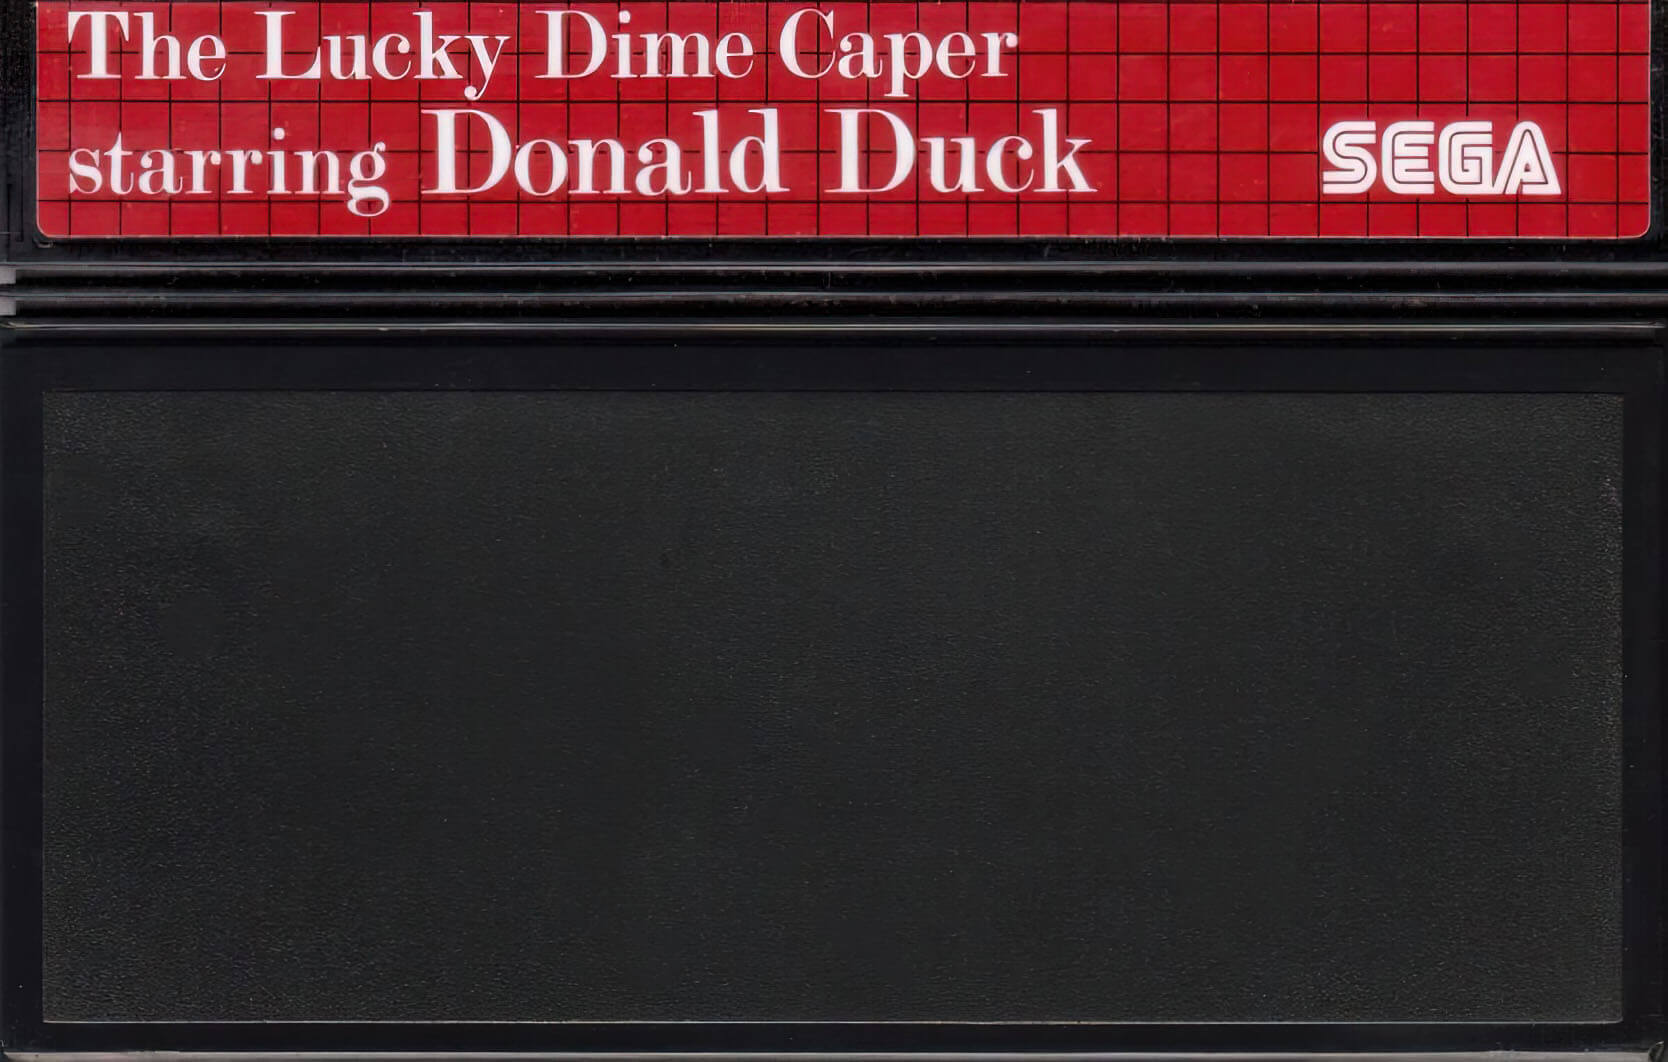 Лицензионный картридж Lucky Dime Caper starring Donald Duck для Sega Master System